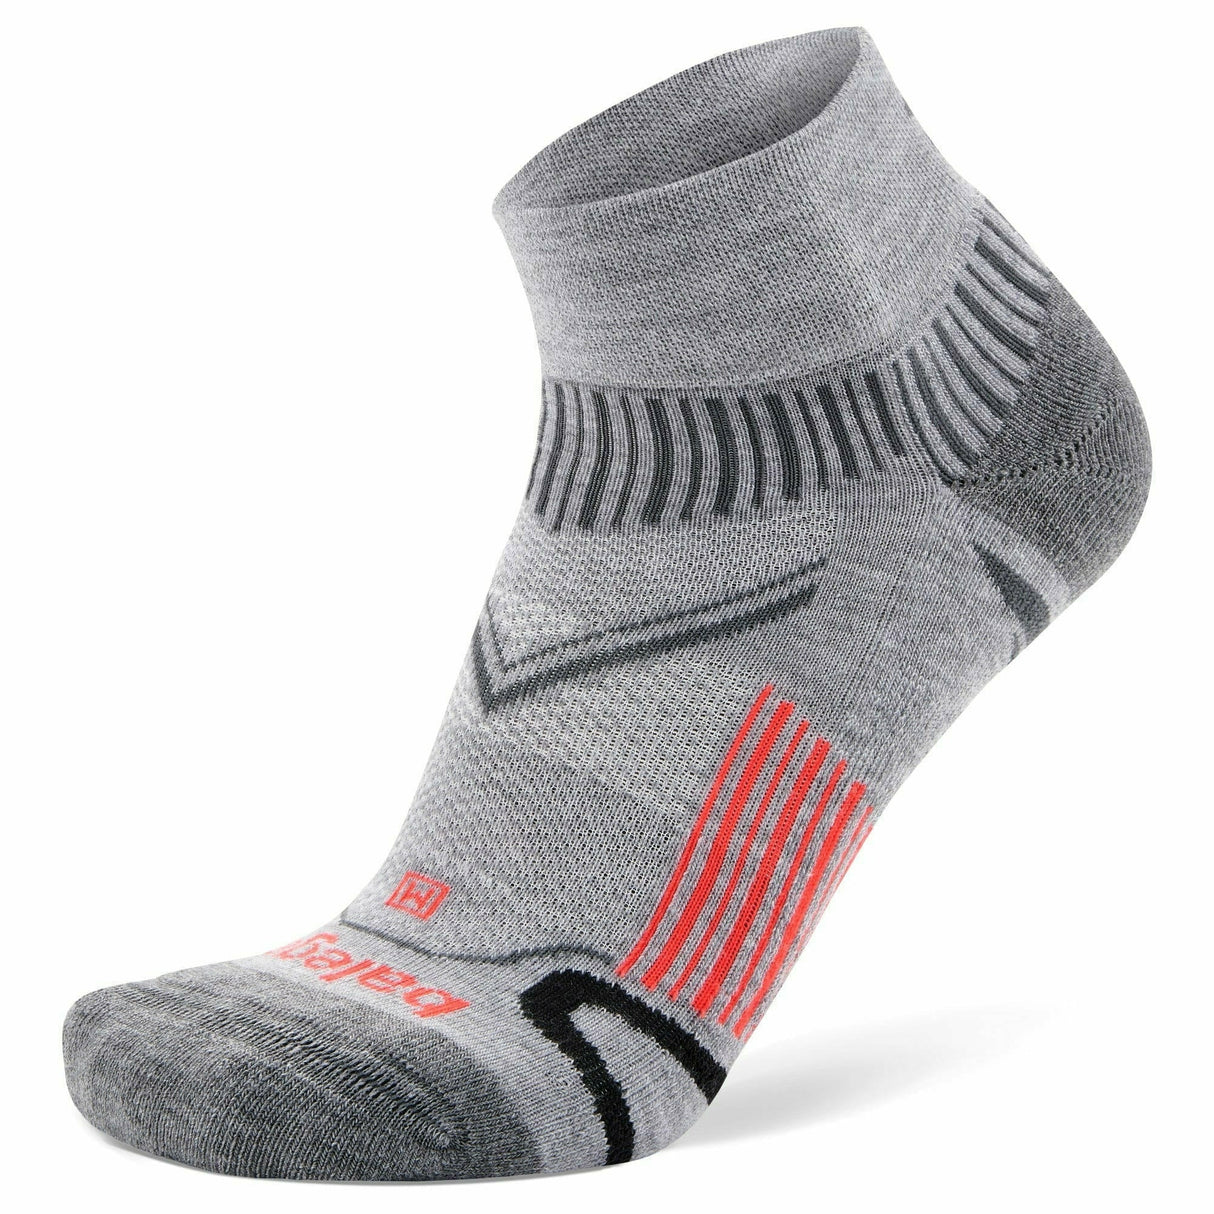 Balega Enduro Quarter Socks  -  Small / Mid Gray